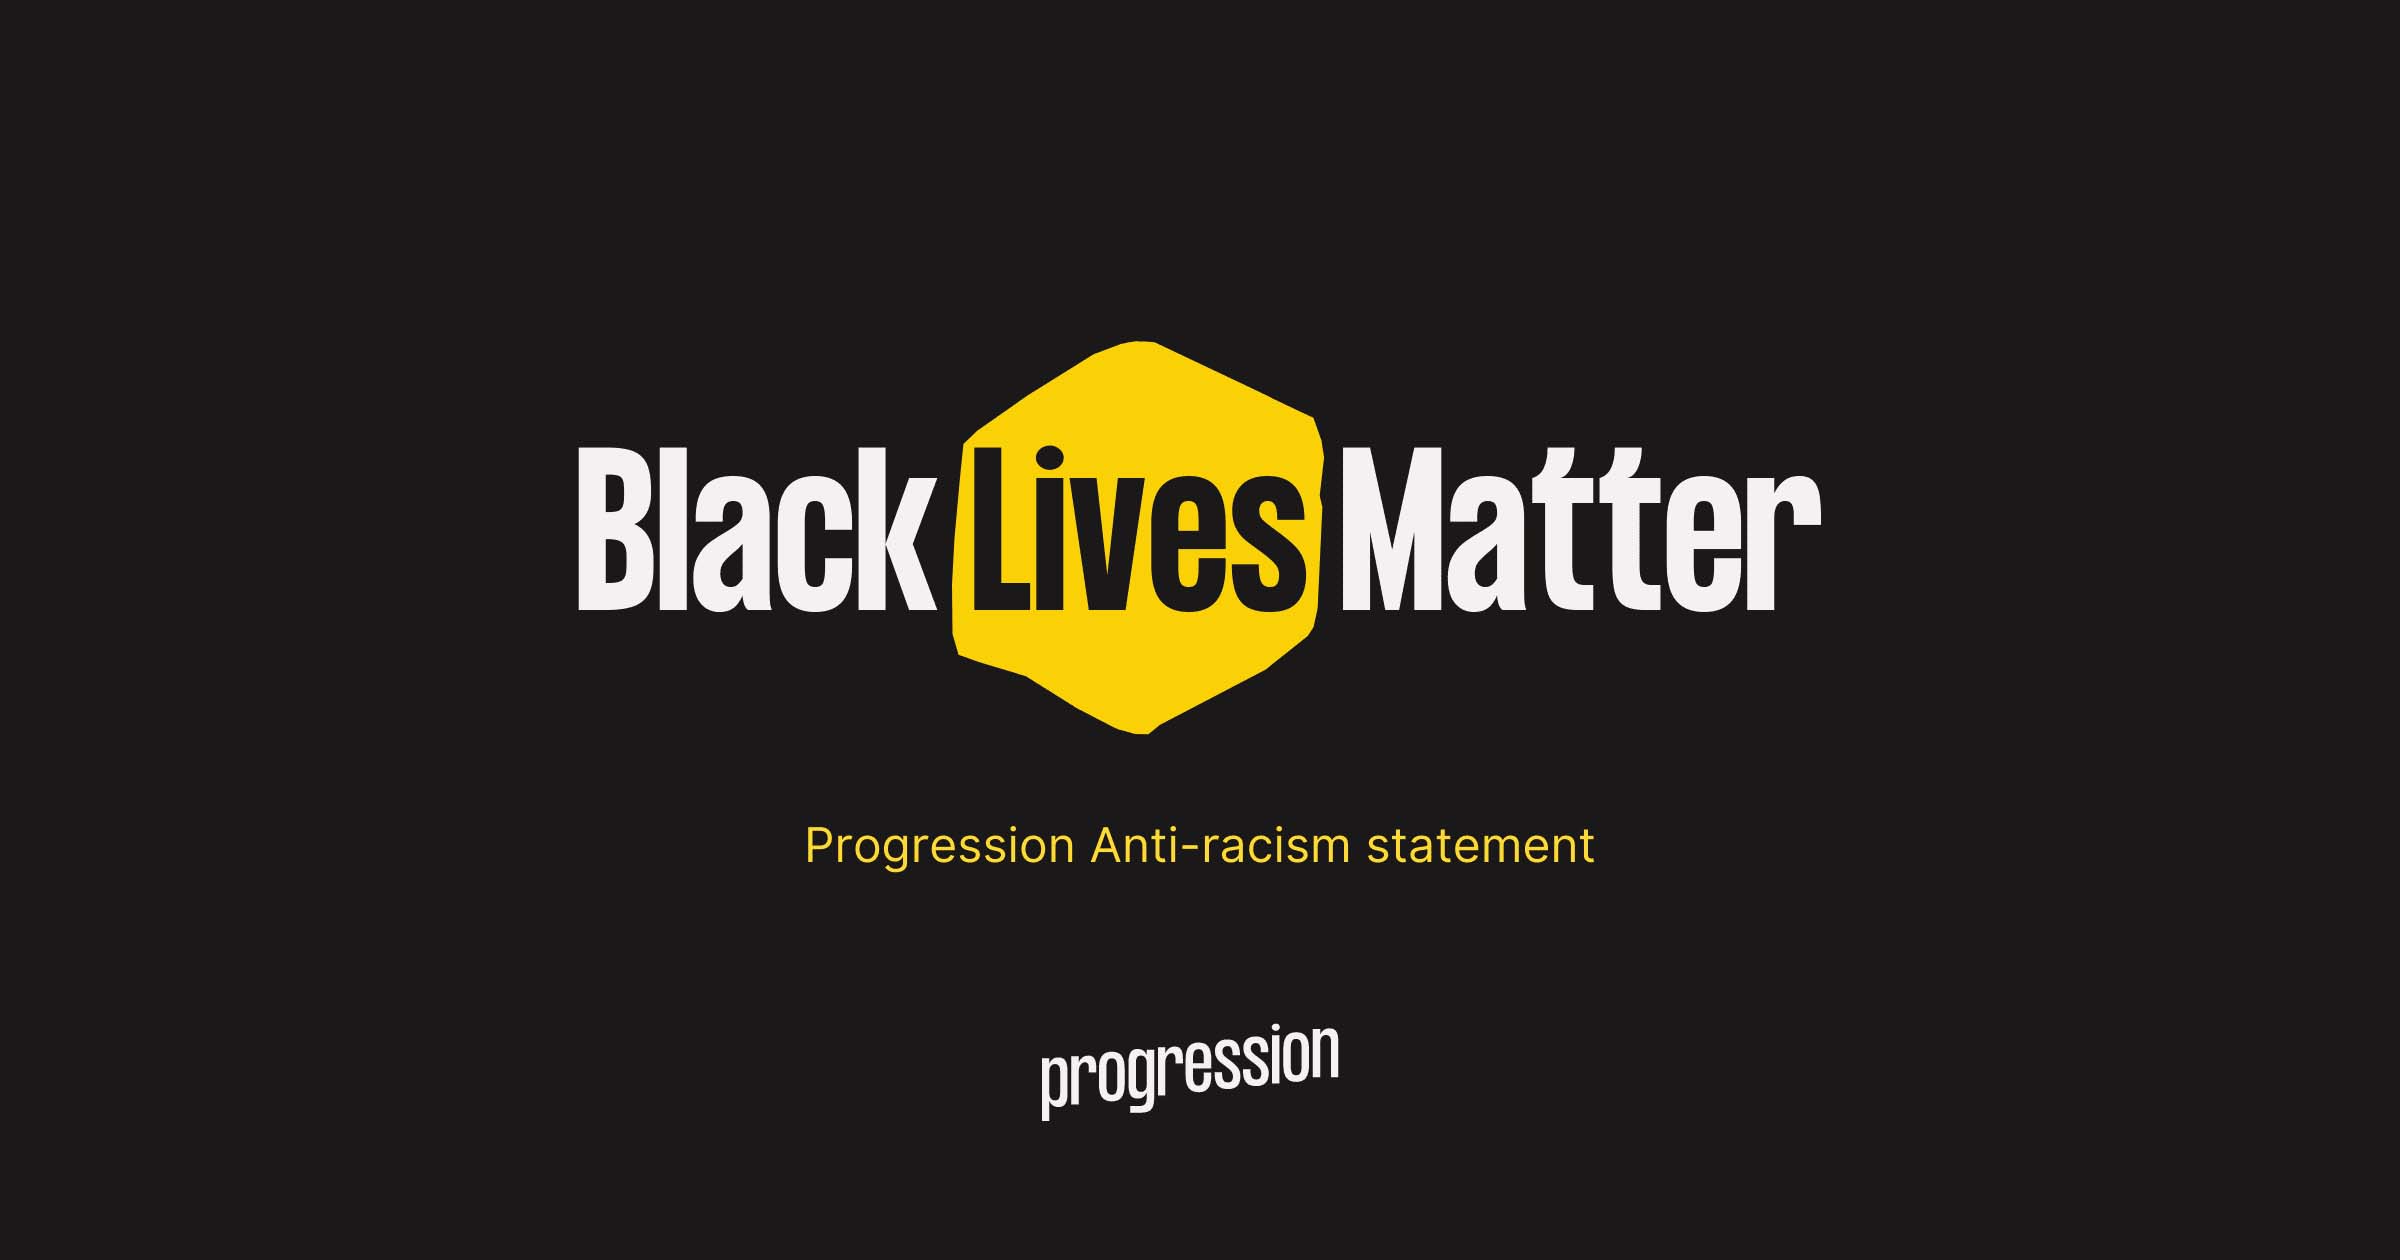 Progression anti-racism statement